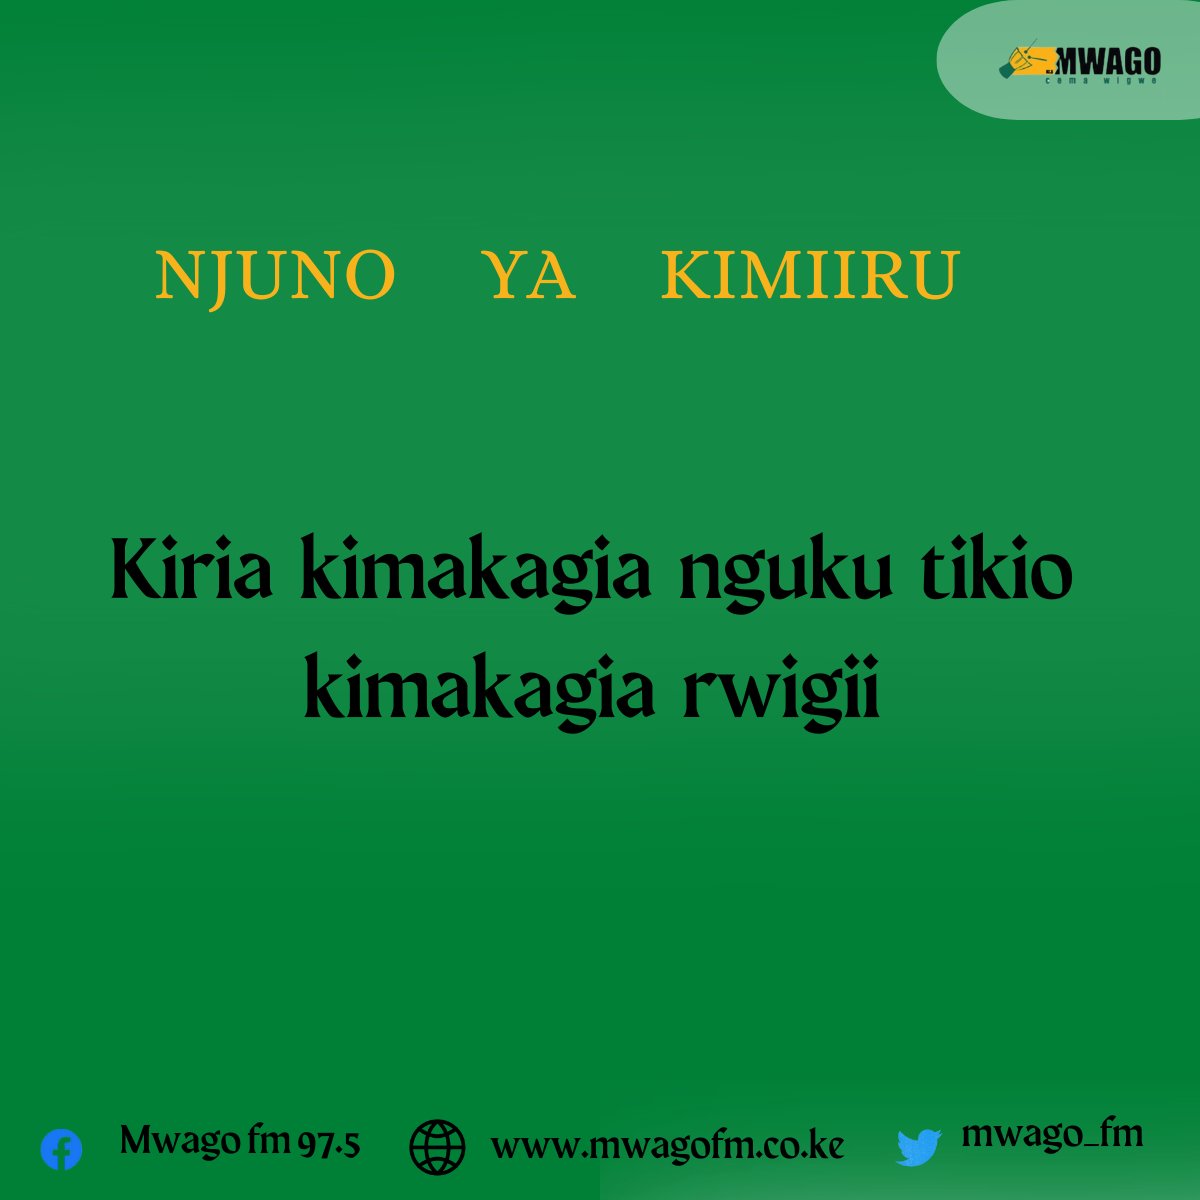 #njunociamwago Kimiiru Kiri Mureo.
#mwagofm #KBCniYetu ^KM